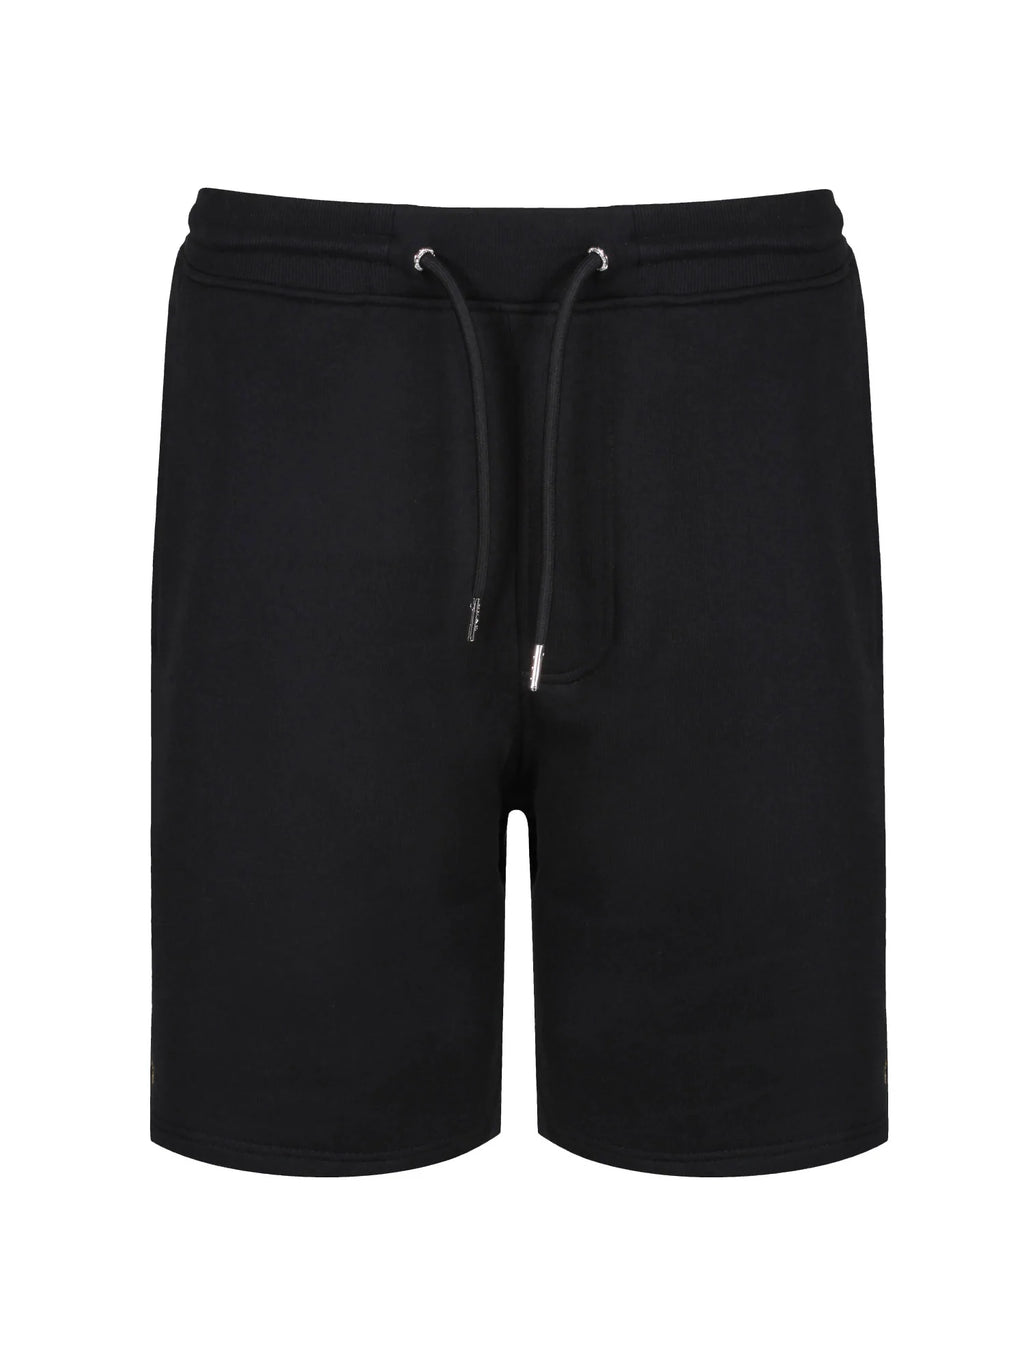 Luke Amsterdam 2 Sweat Shorts Jet Black - Raw Menswear